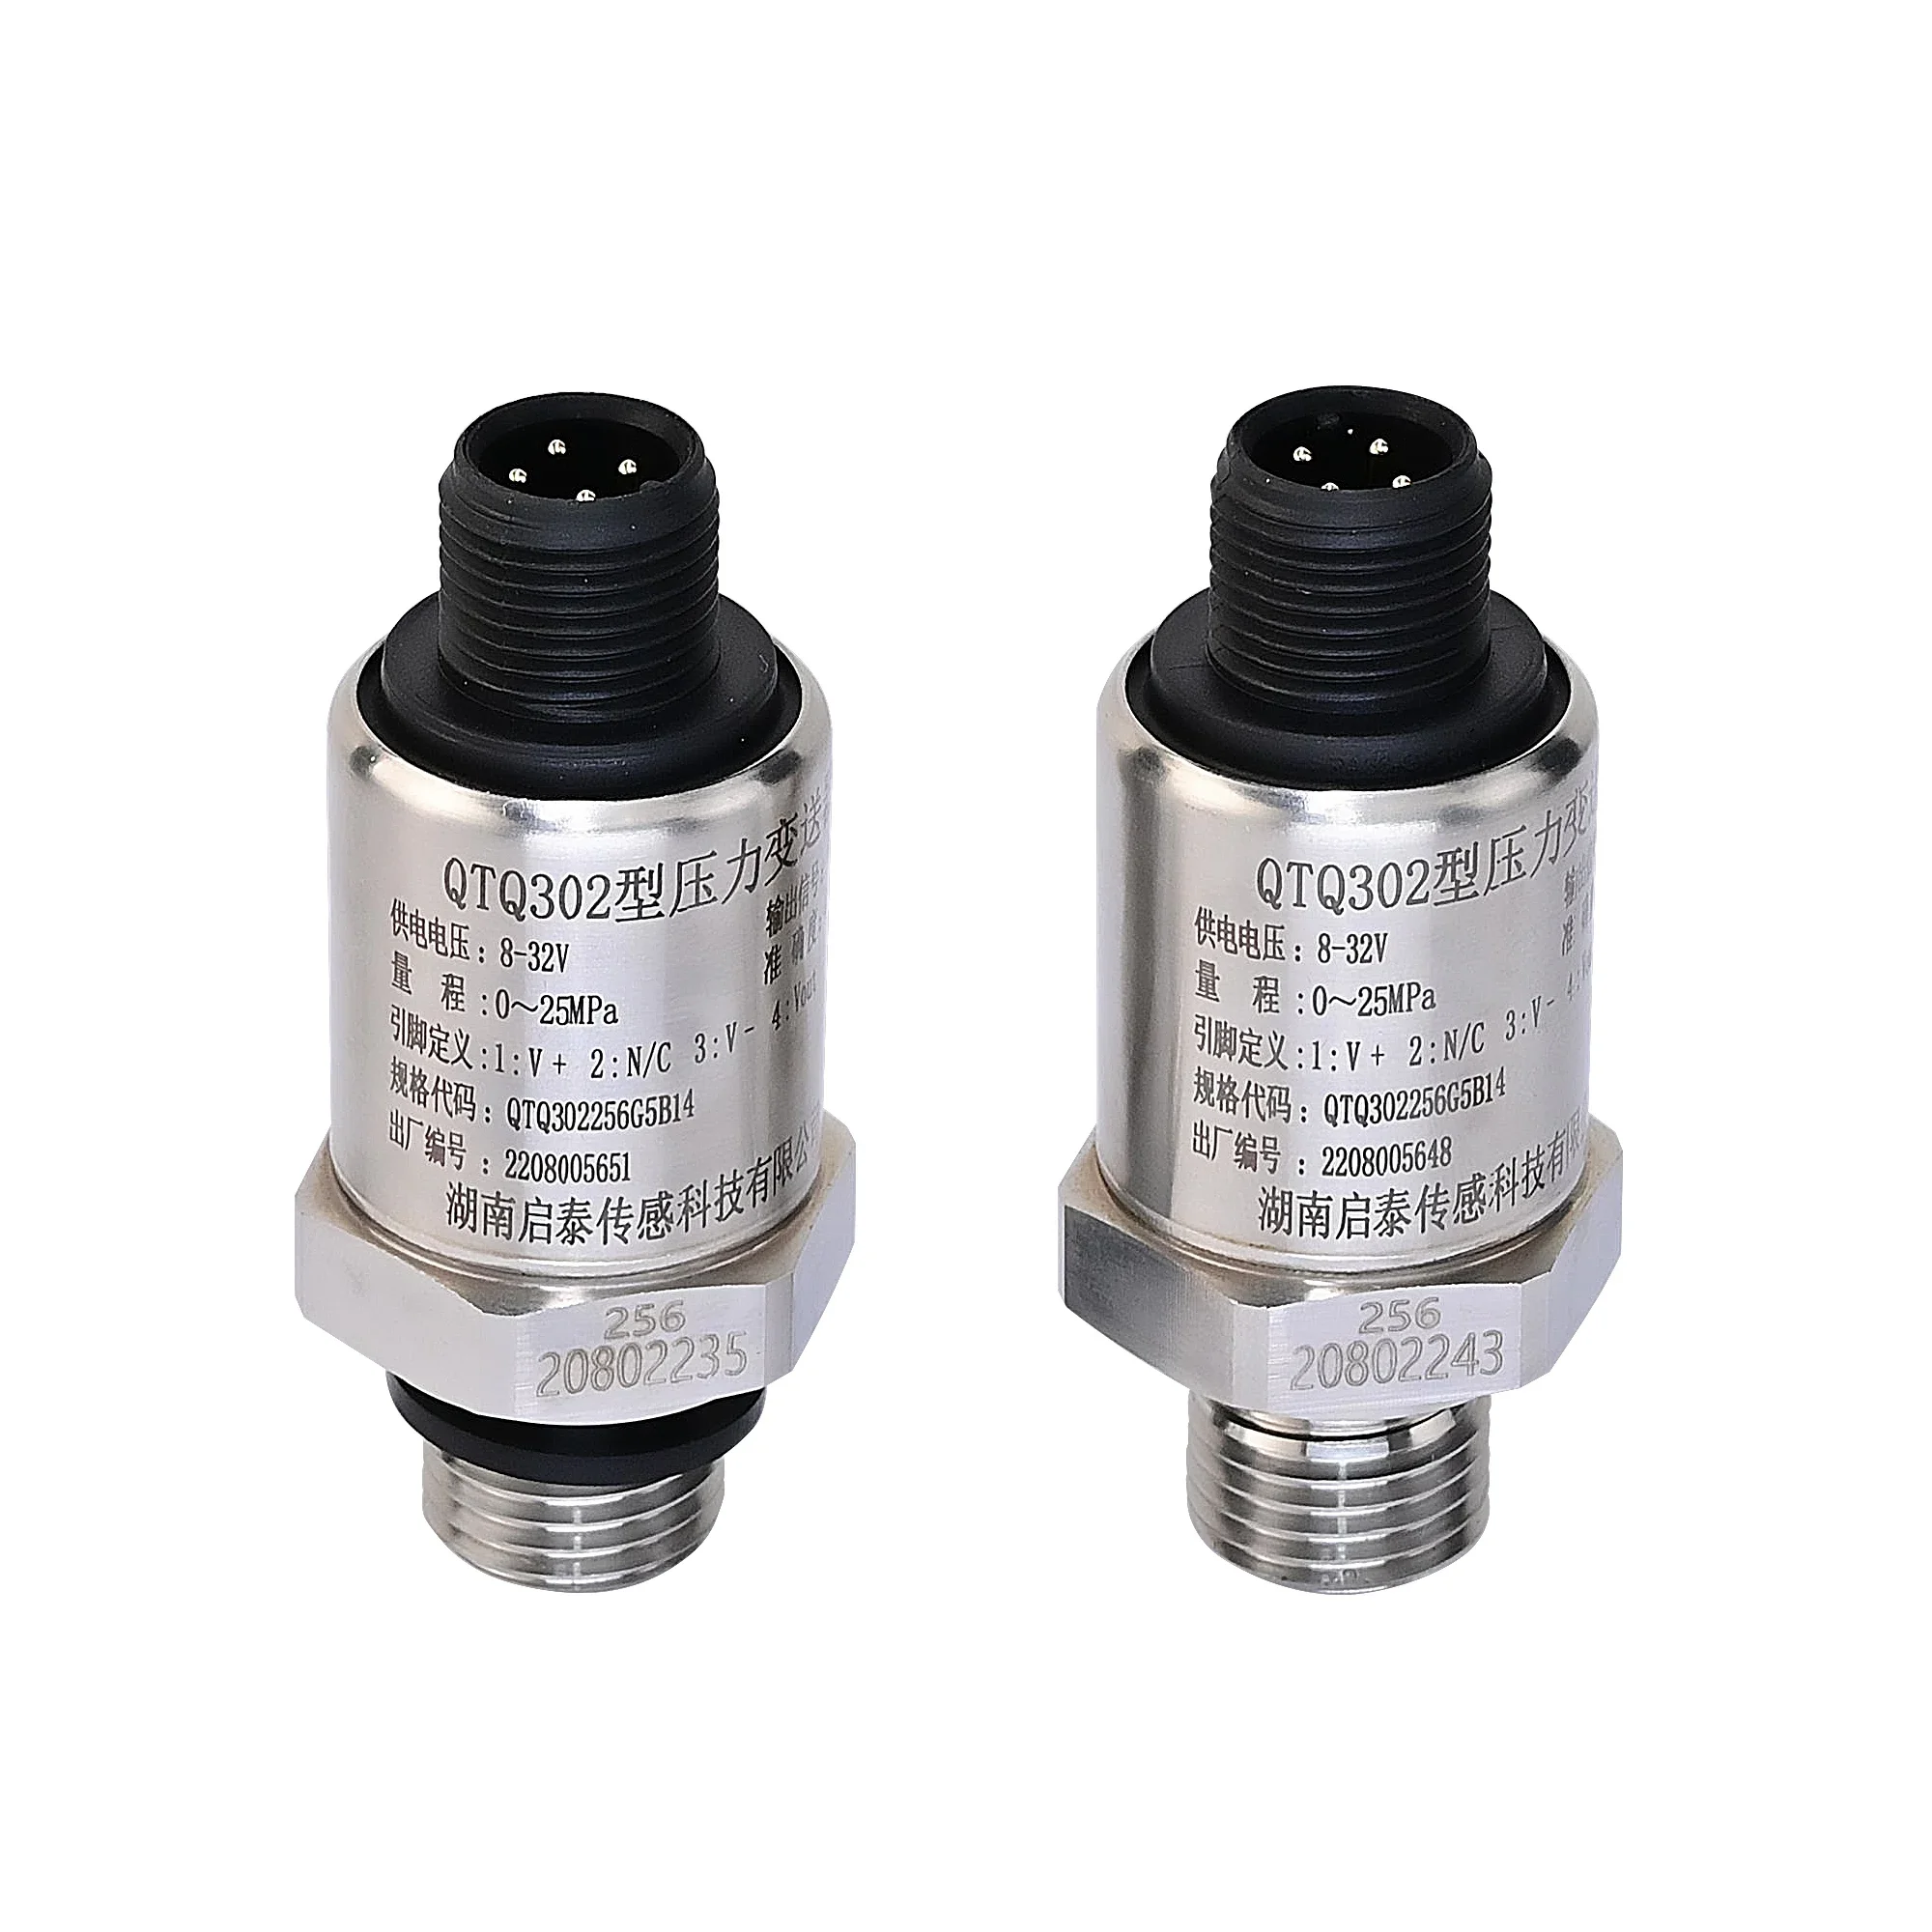 

Chntek High Quality micro liquid pressure sensor 0.5-4.5V 4~20mA china pressure transmitter